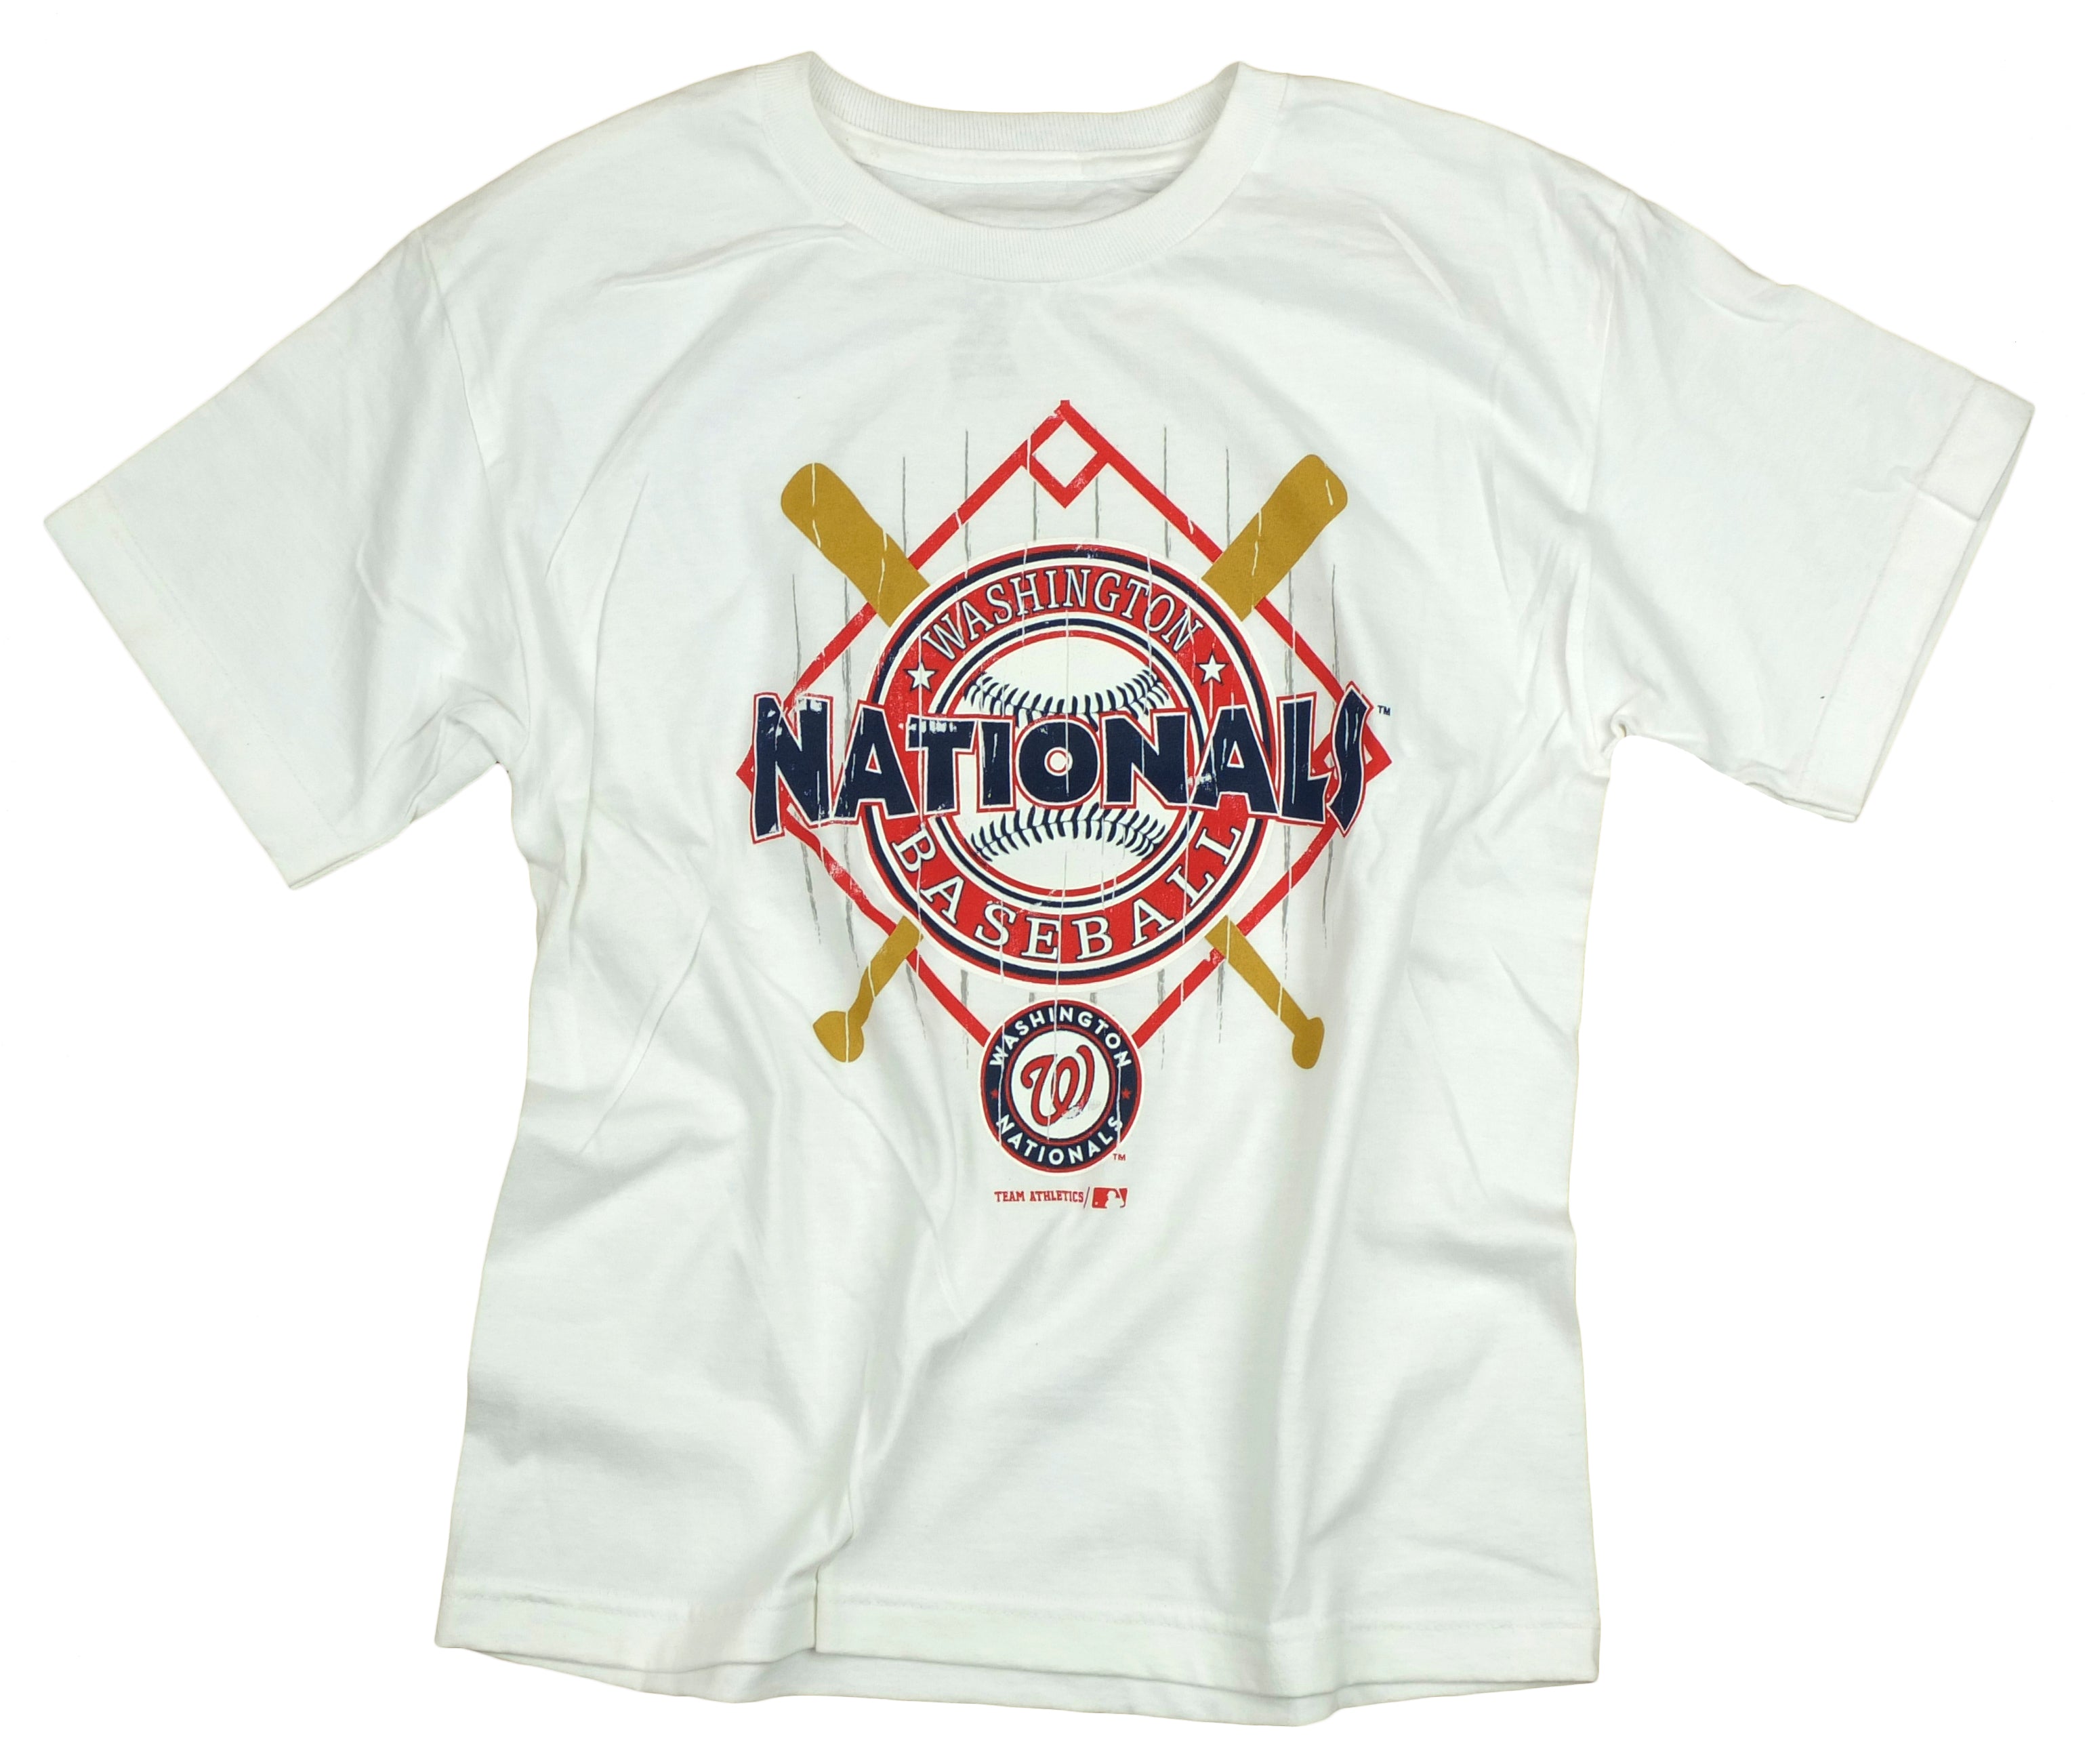 Cheap Washington Nationals Apparel, Discount Nationals Gear, MLB